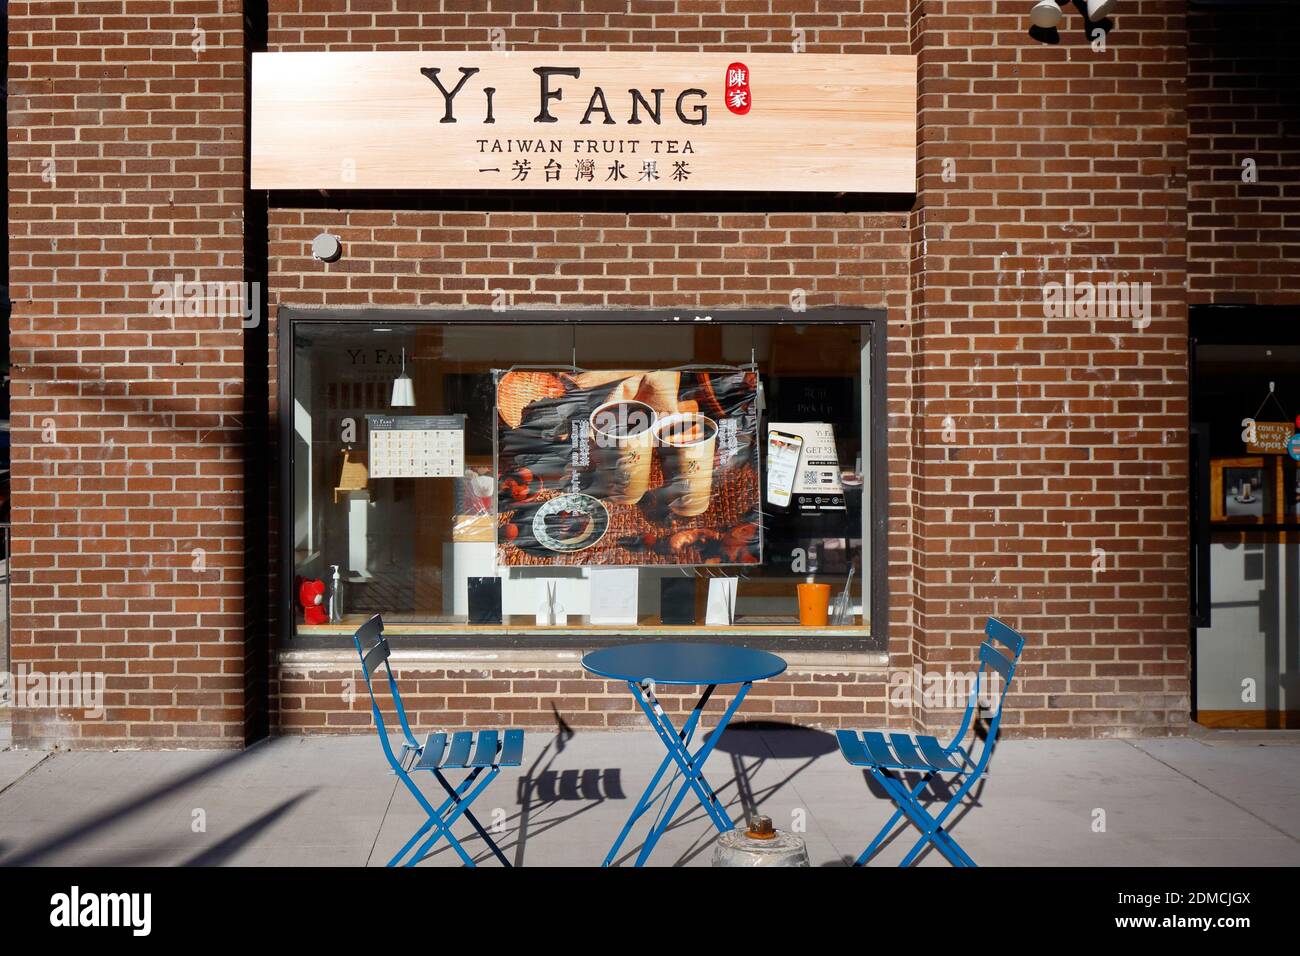 Yi Fang Taiwan Fruit Tea 一芳台灣水果茶, 61 Lexington Ave, New York, NYC Foto von einem Bubble Tea Shop im Viertel Rose Hill in Manhattan. Stockfoto